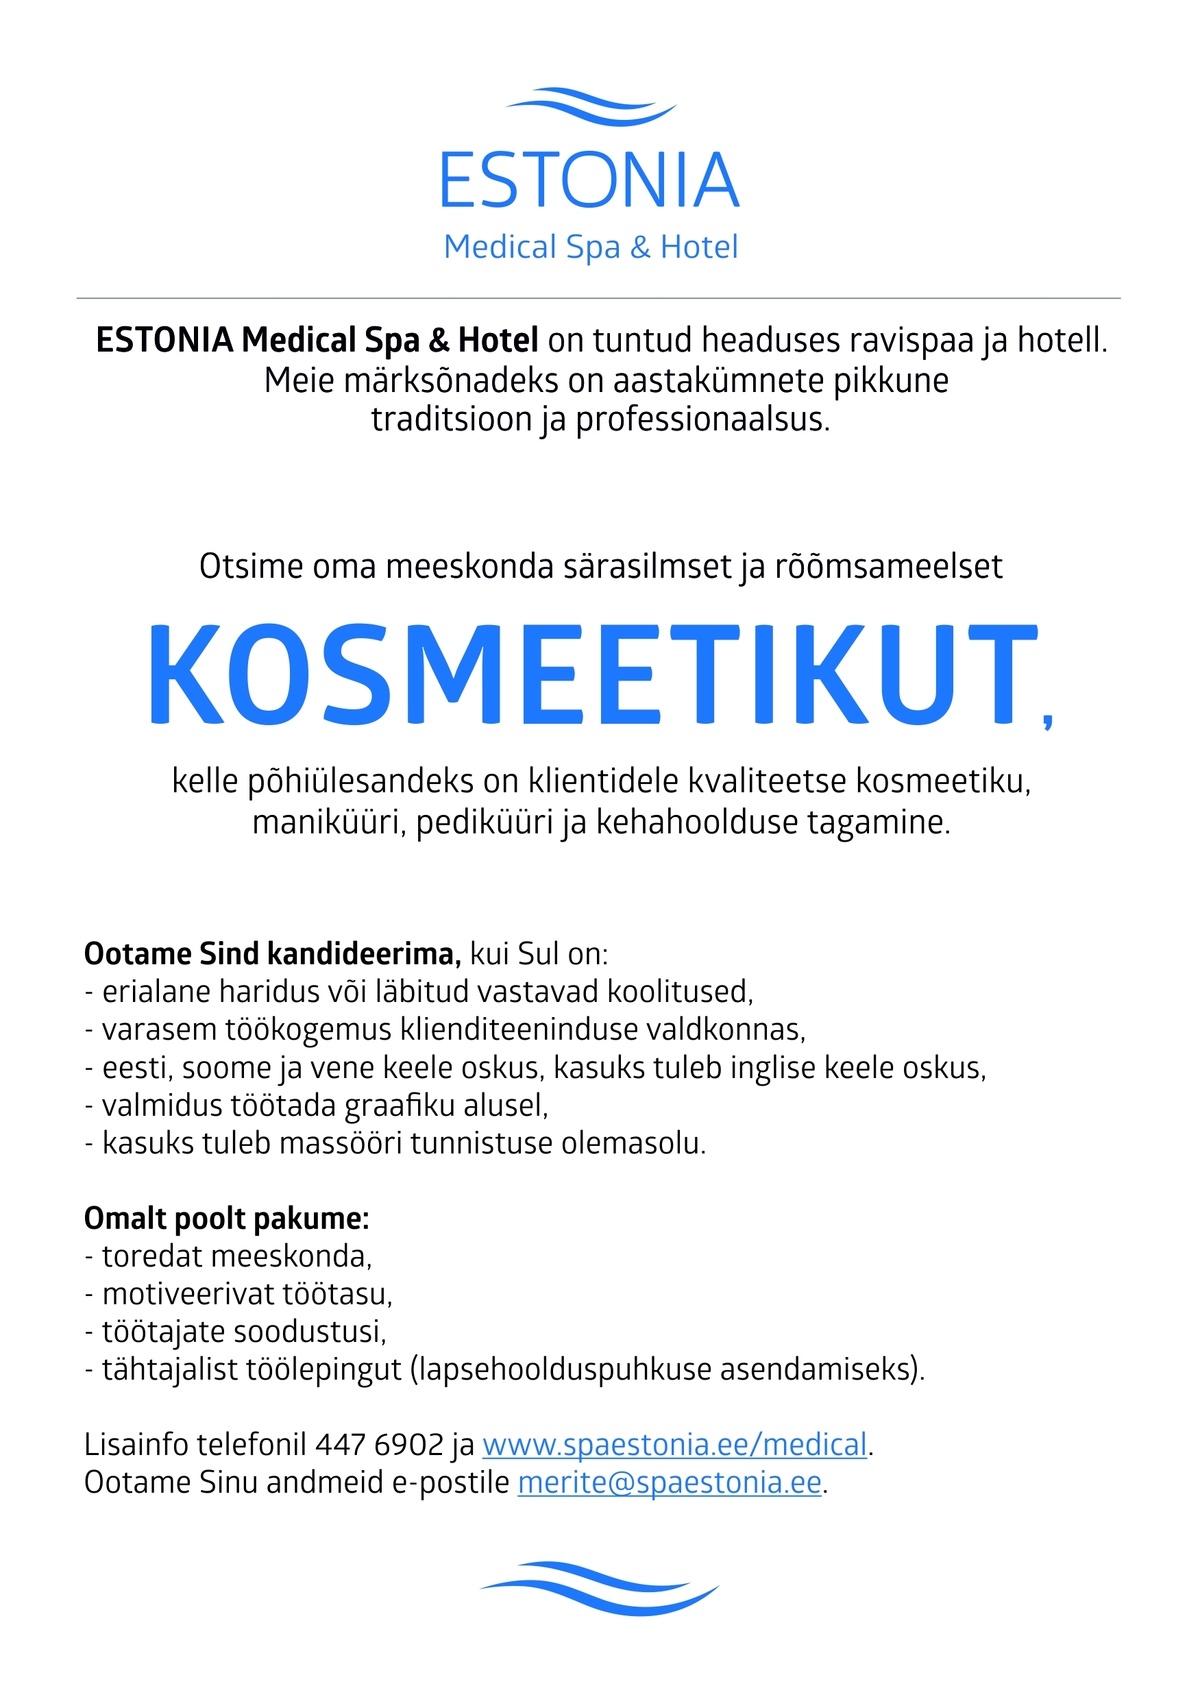 Estonia Spa Hotels AS Kosmeetik